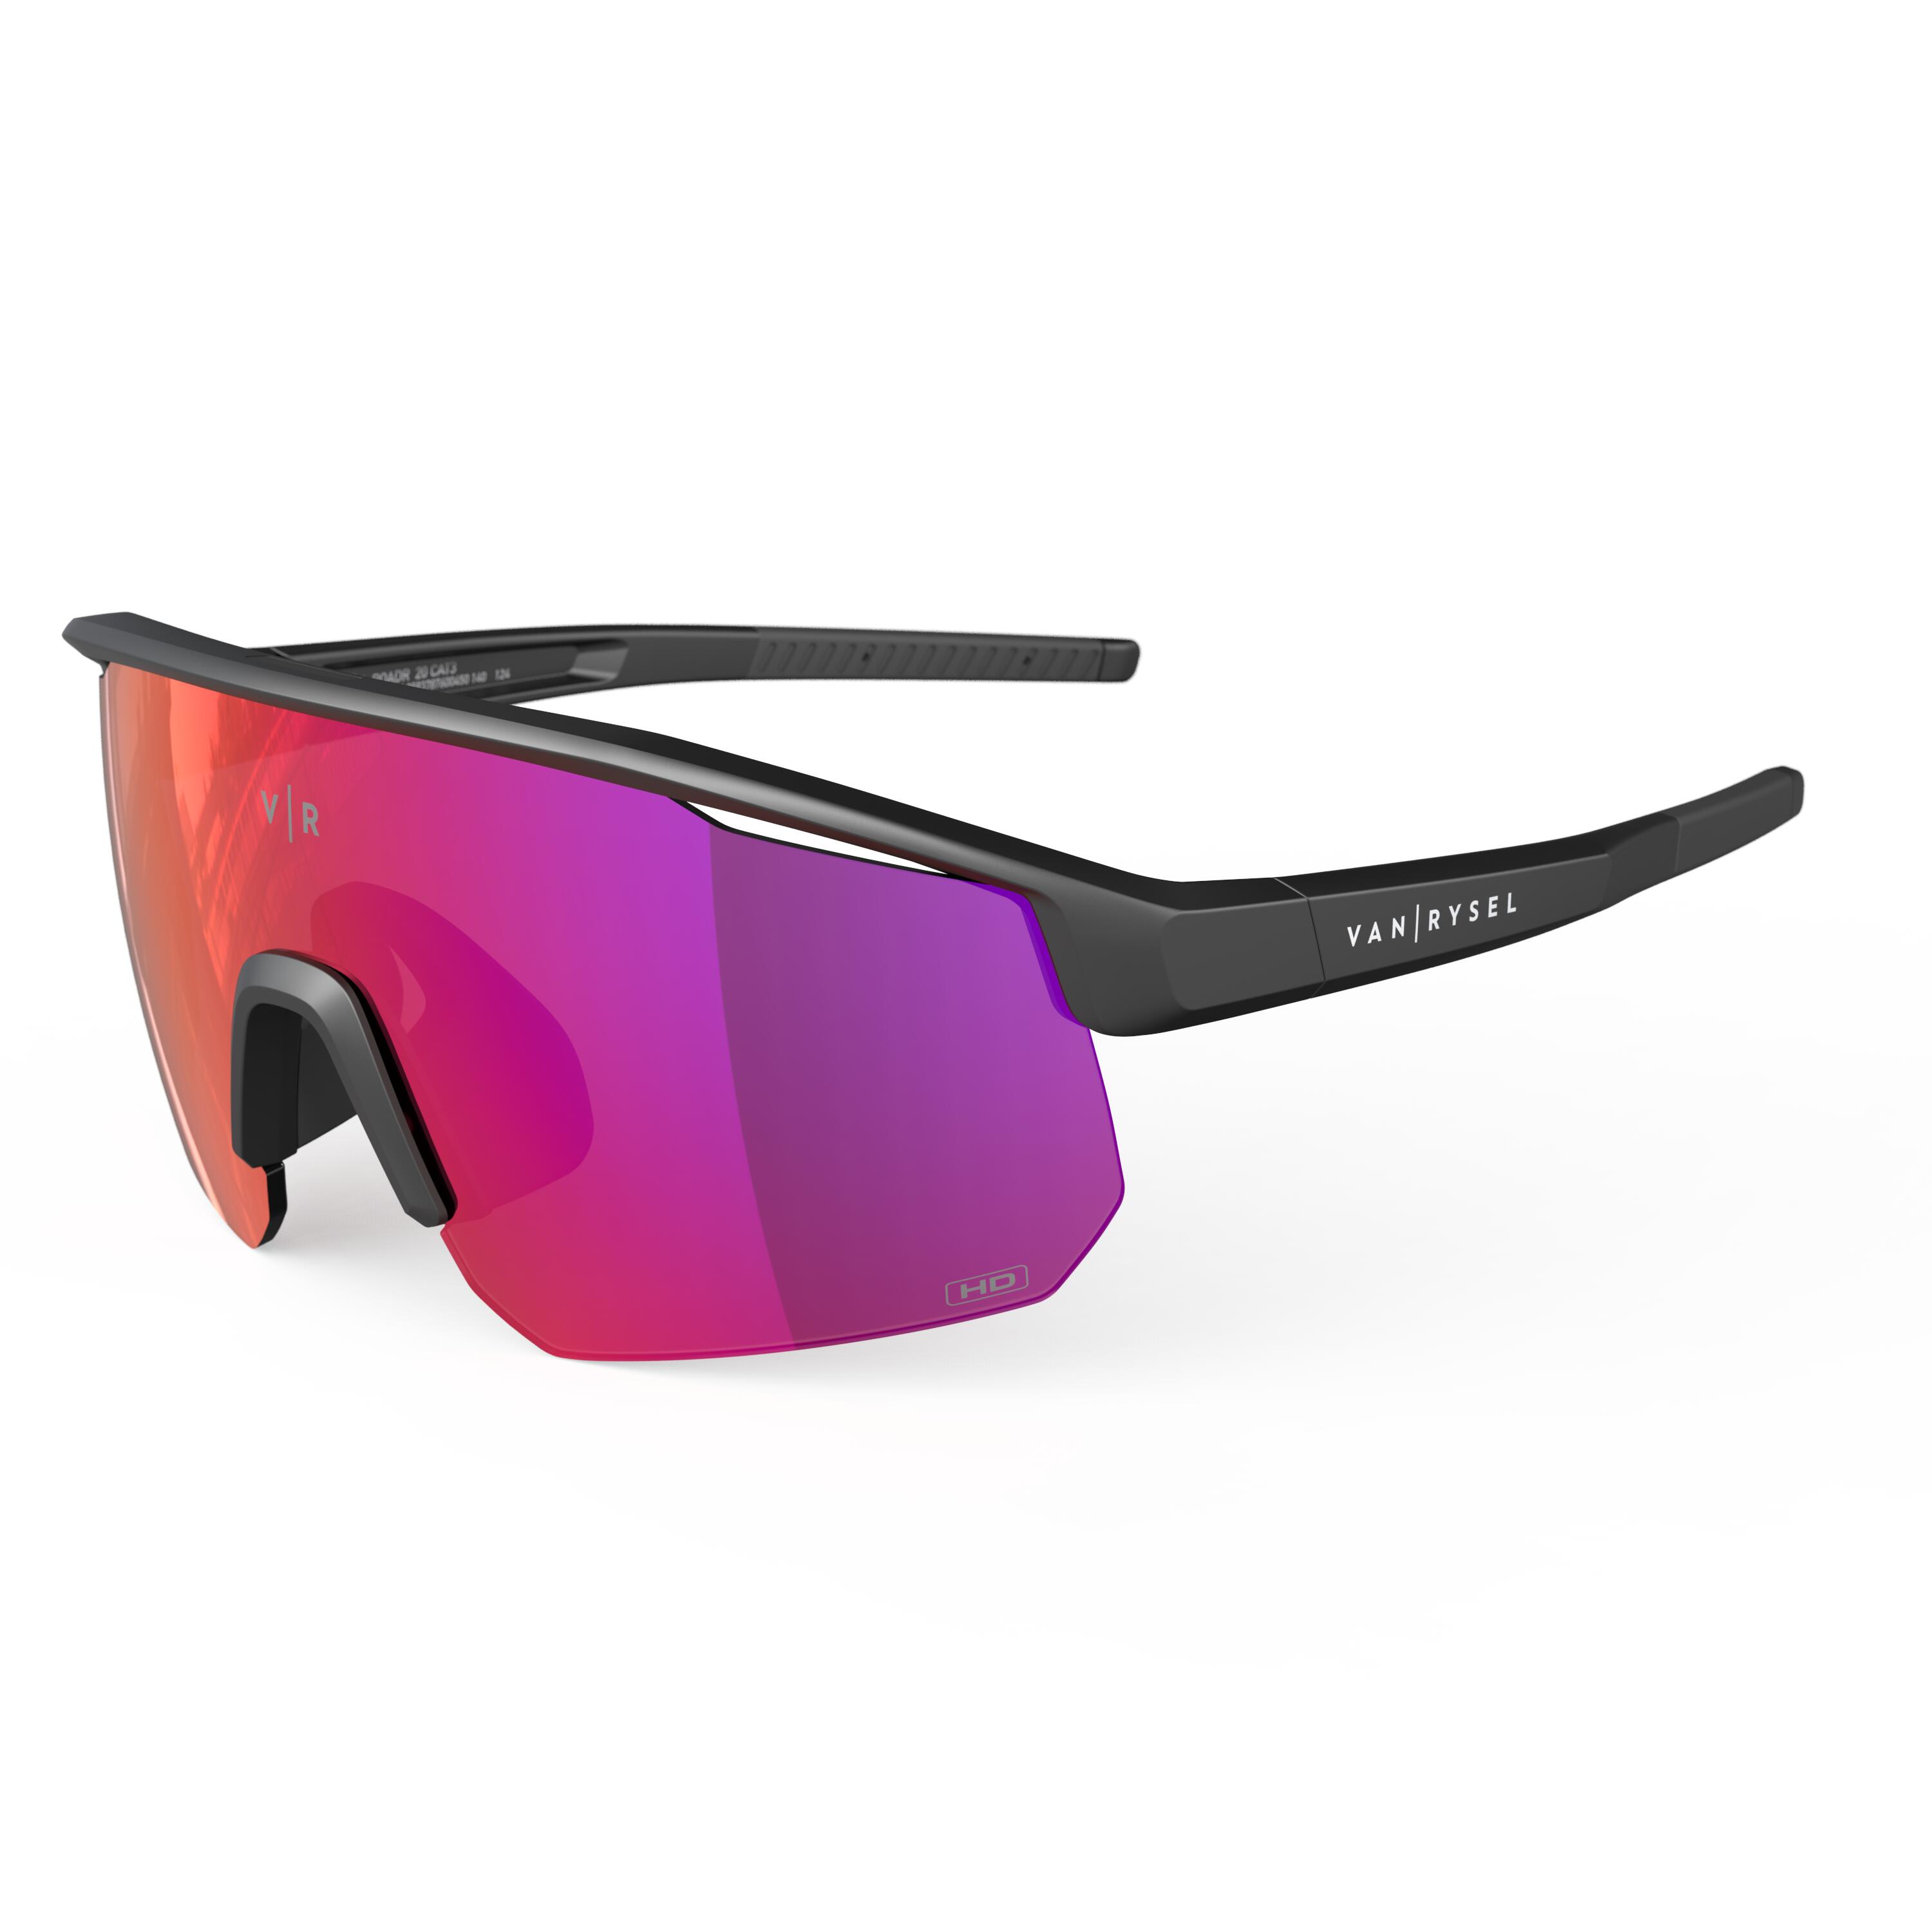 Cycling Glasses - RoadR 900 HD - black - Van rysel - Decathlon